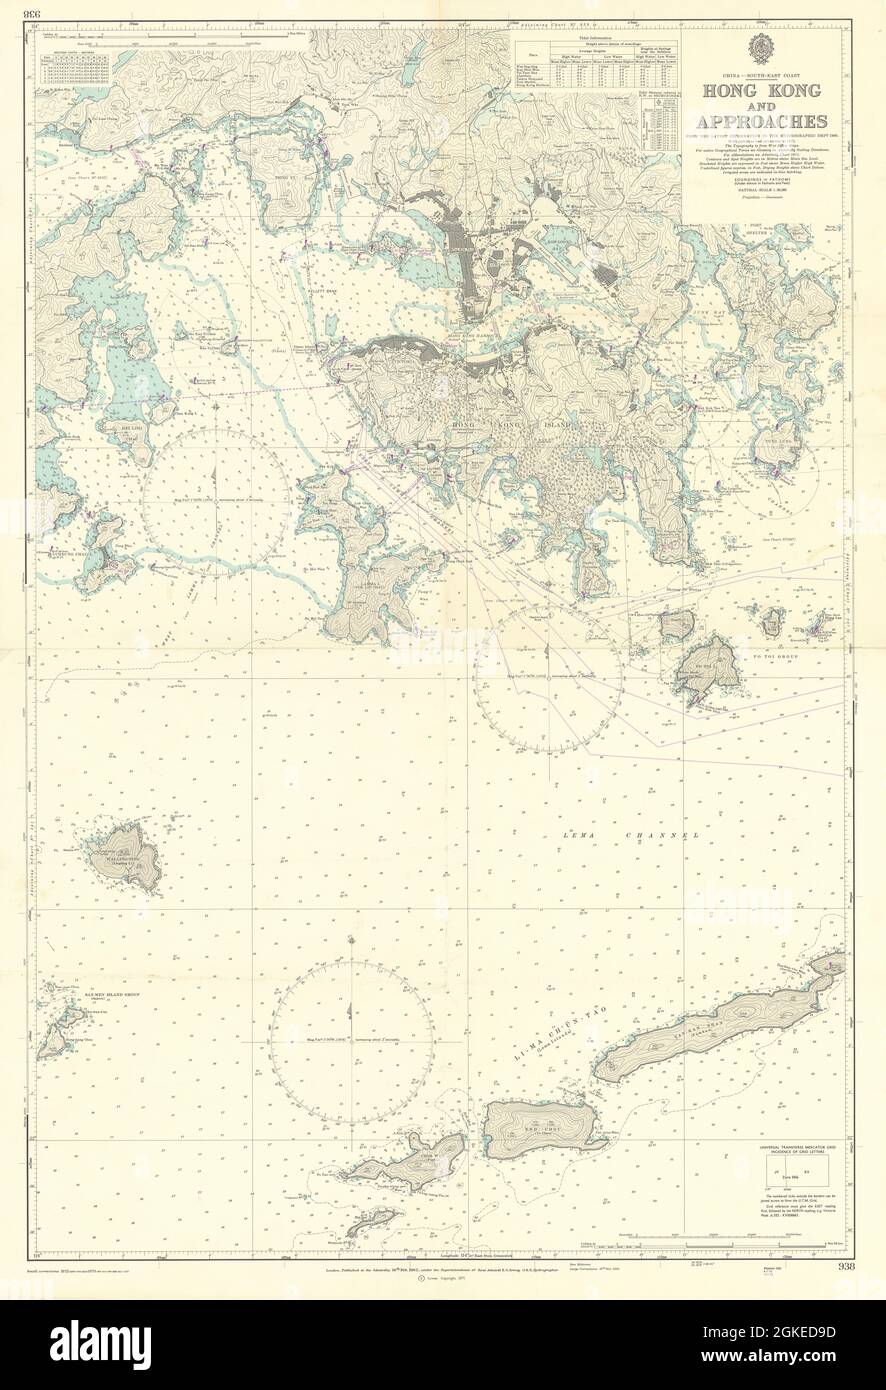 Hong Kong & approaches. China Sea. ADMIRALTY sea chart 1962 (1973) old map Stock Photo